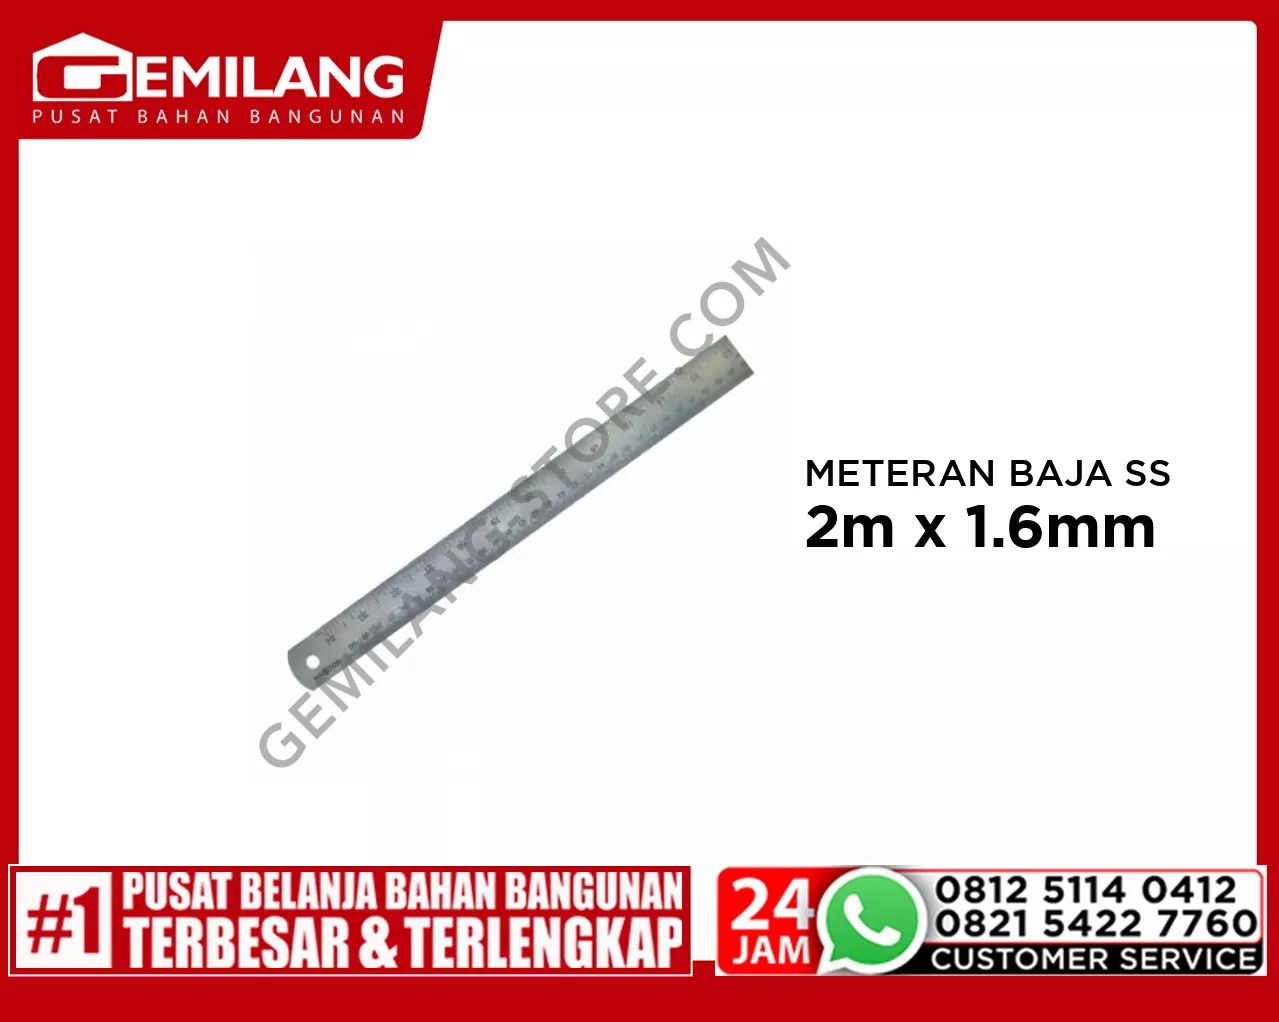 PROHEX METERAN BAJA STAINLESS 2m x 1.6mm (2360-200)